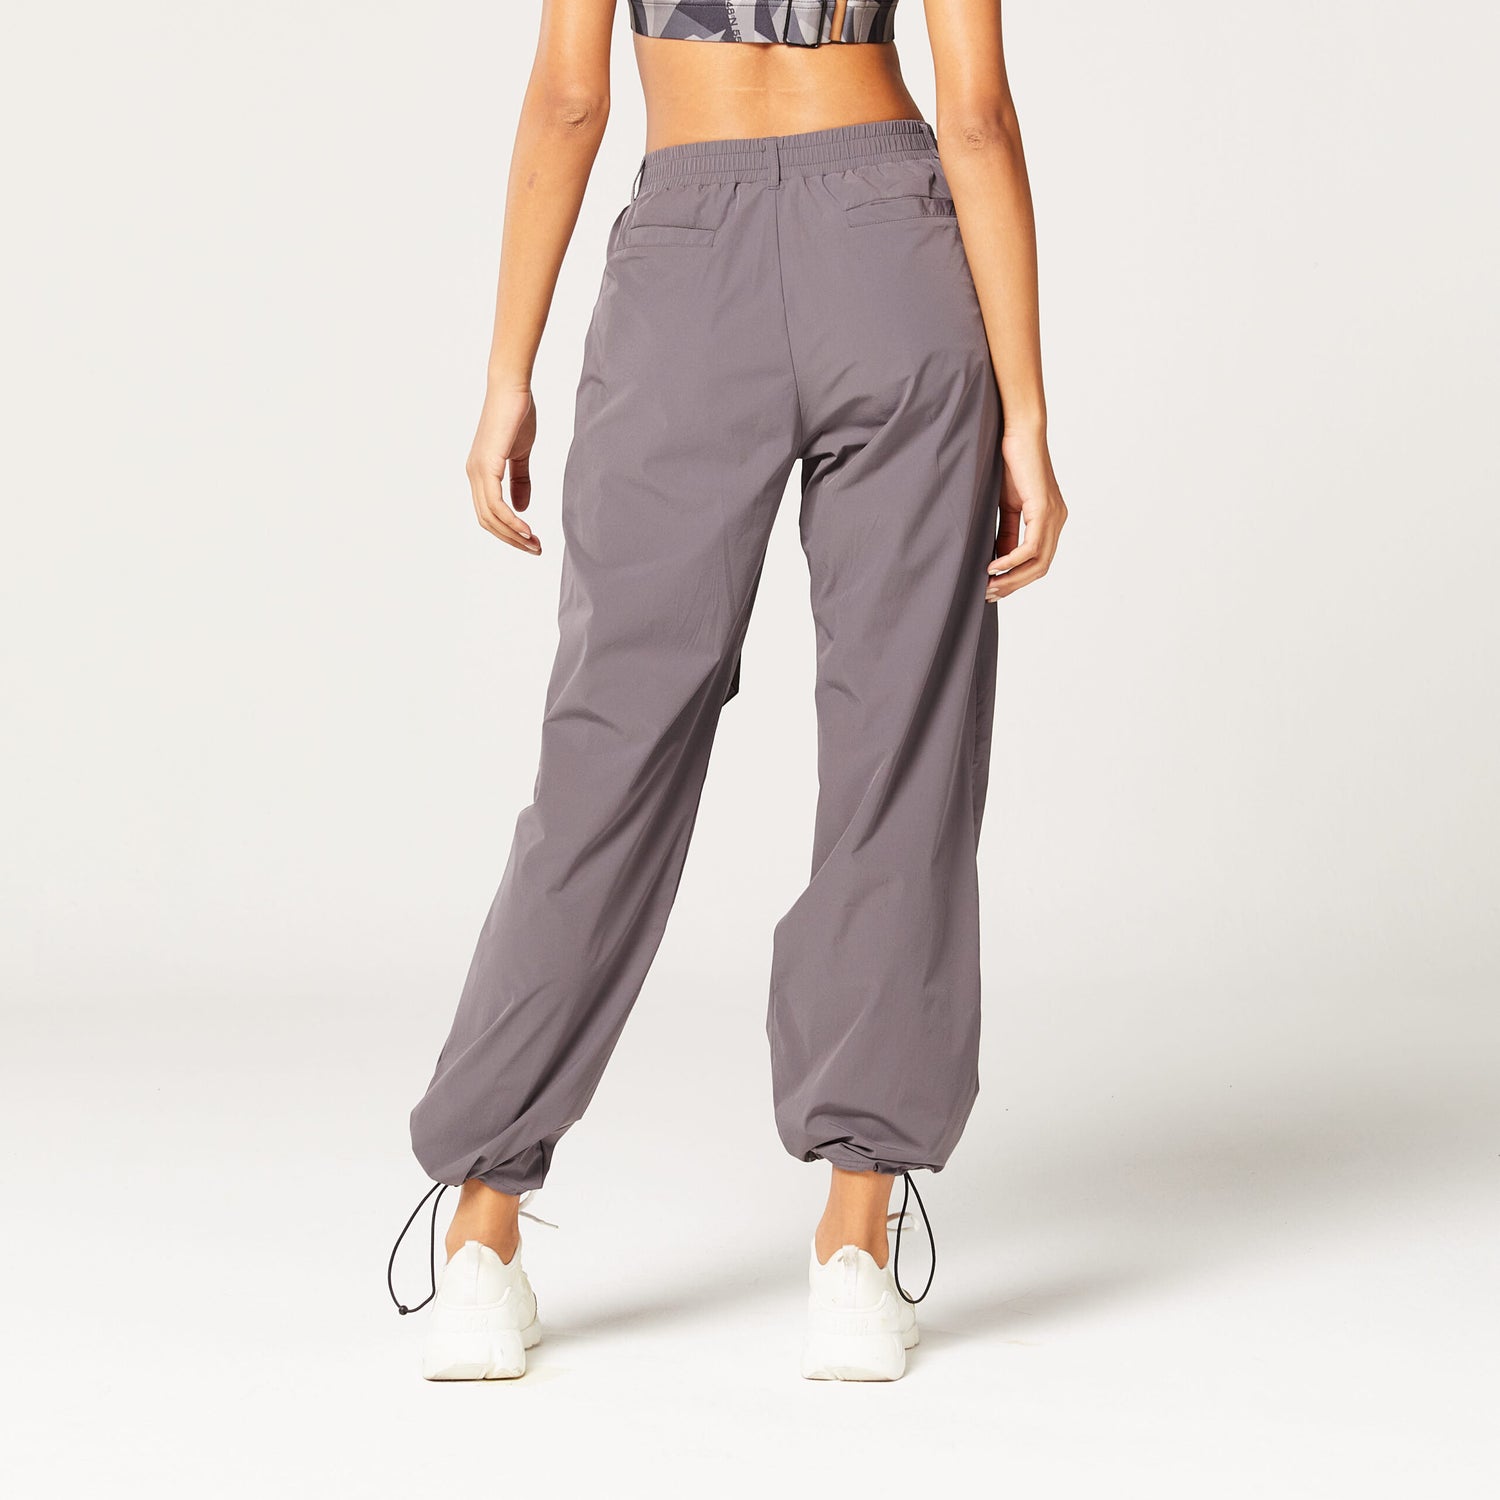 FK, Code Cargo Pants - Charcoal, Workout Pants Women